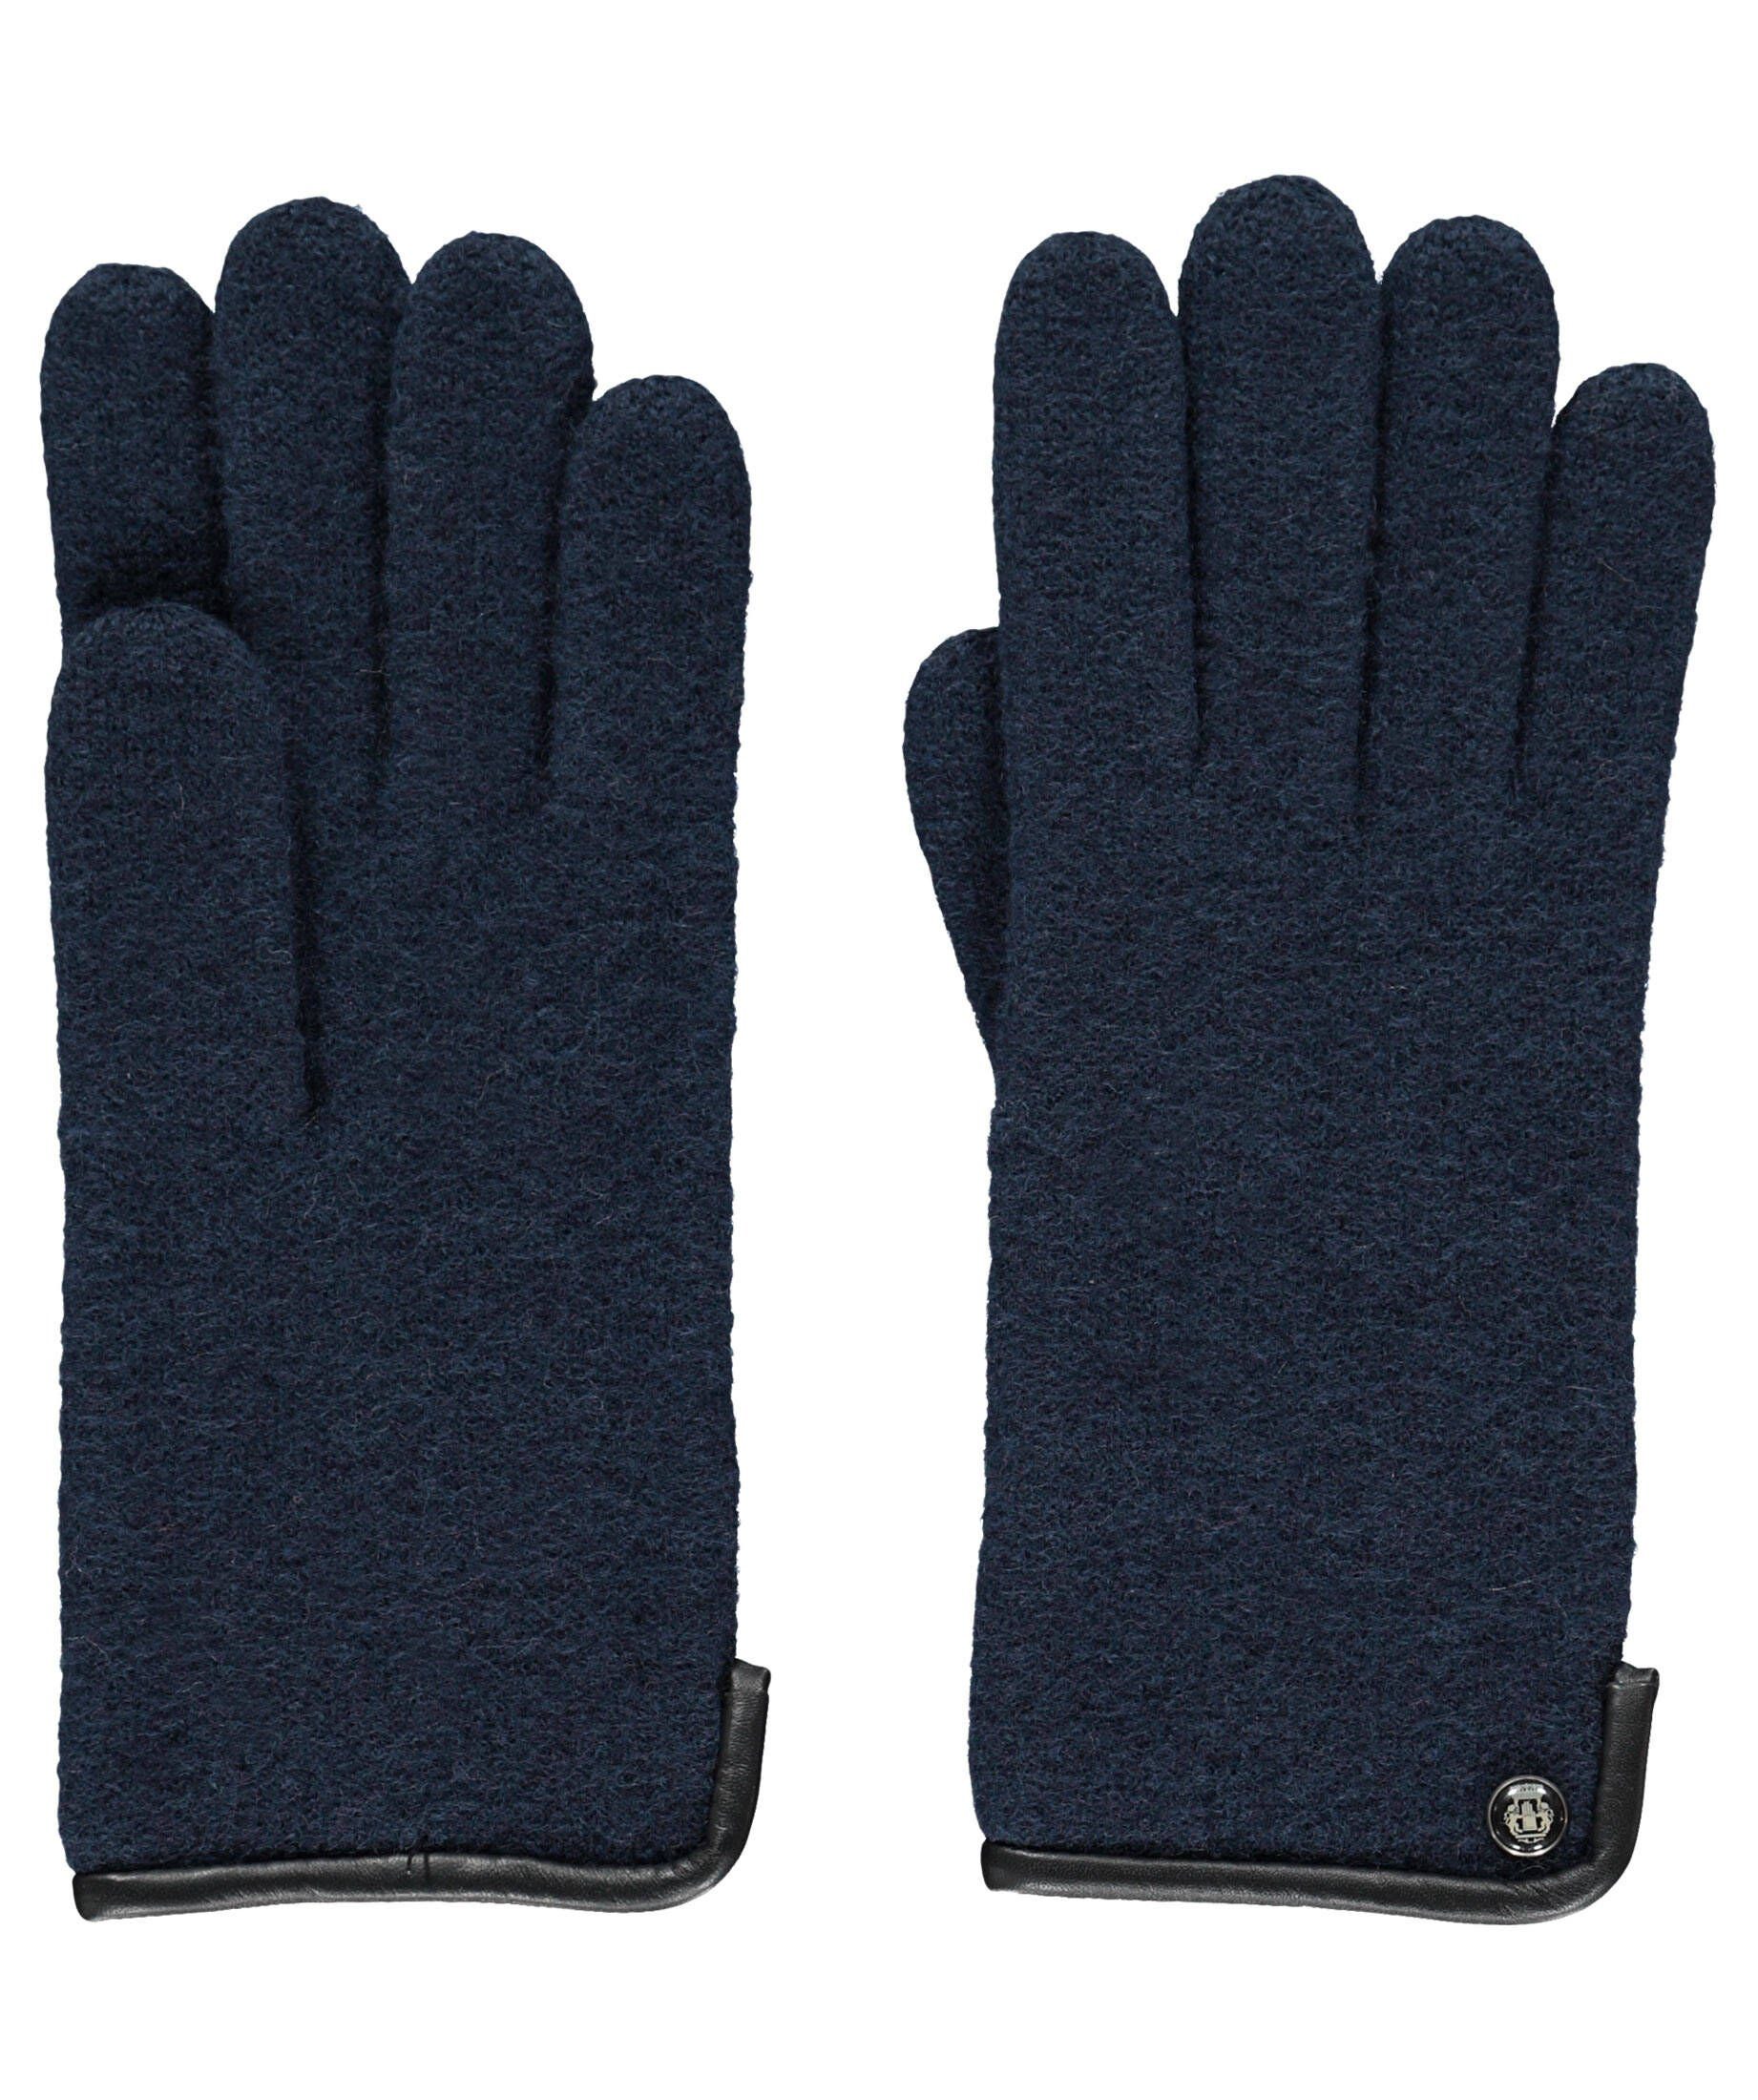 Roeckl SPORTS Laufhandschuhe Damen Handschuhe marine (52) | 